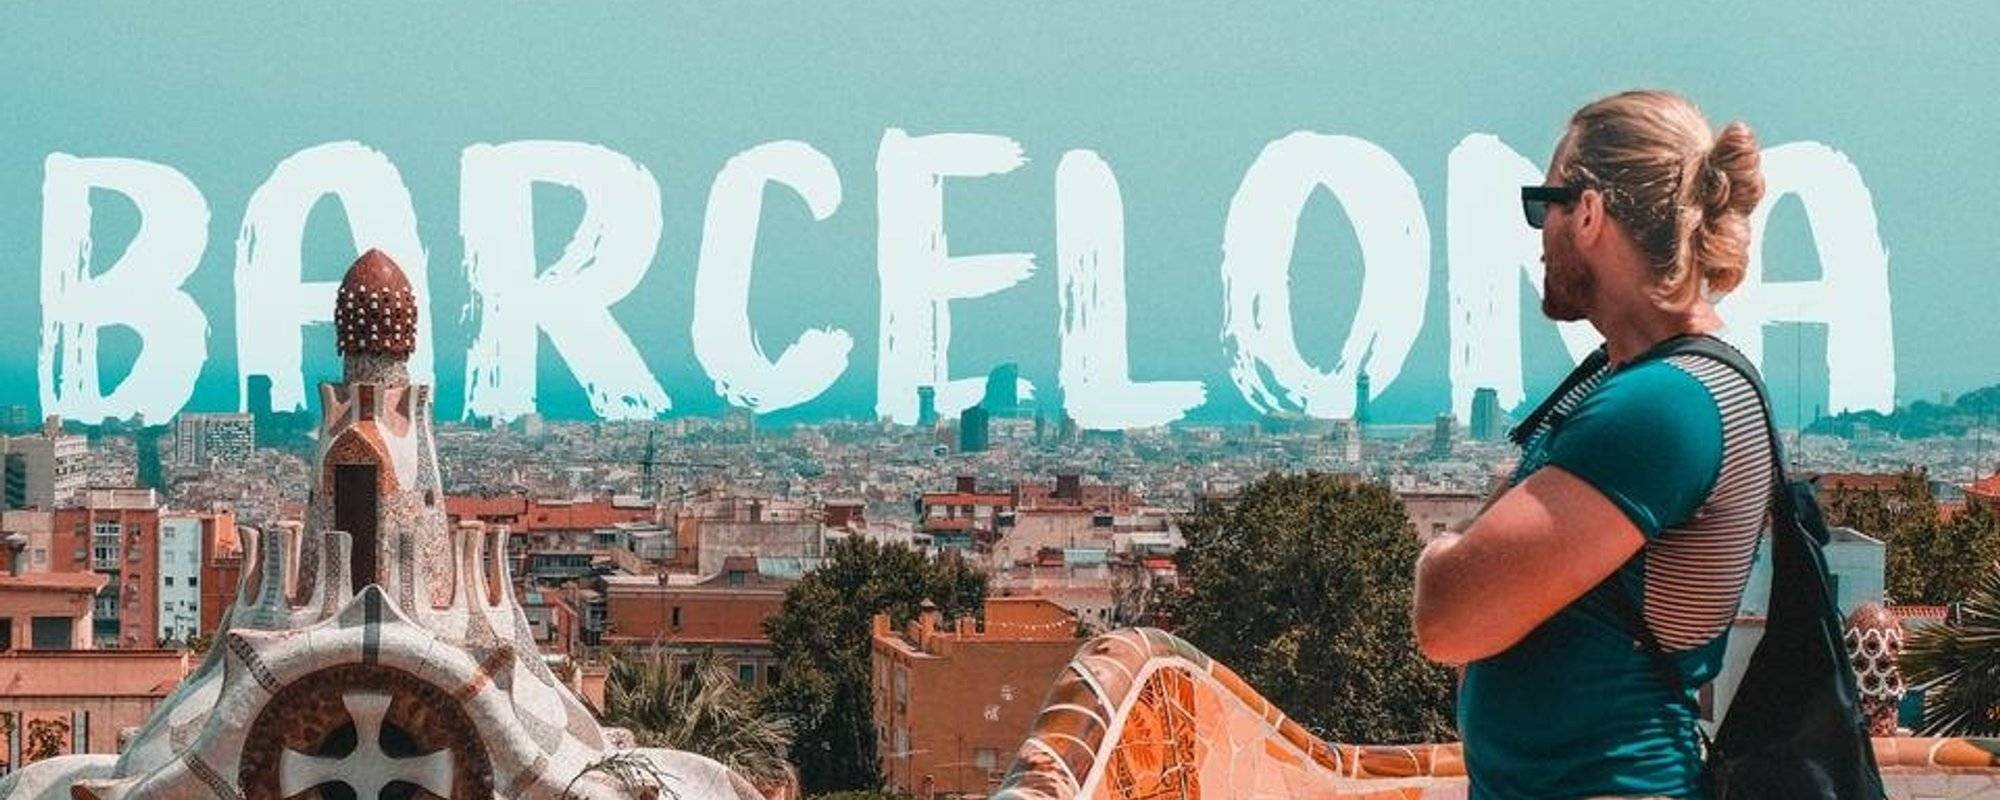 Barcelona, an amazing city